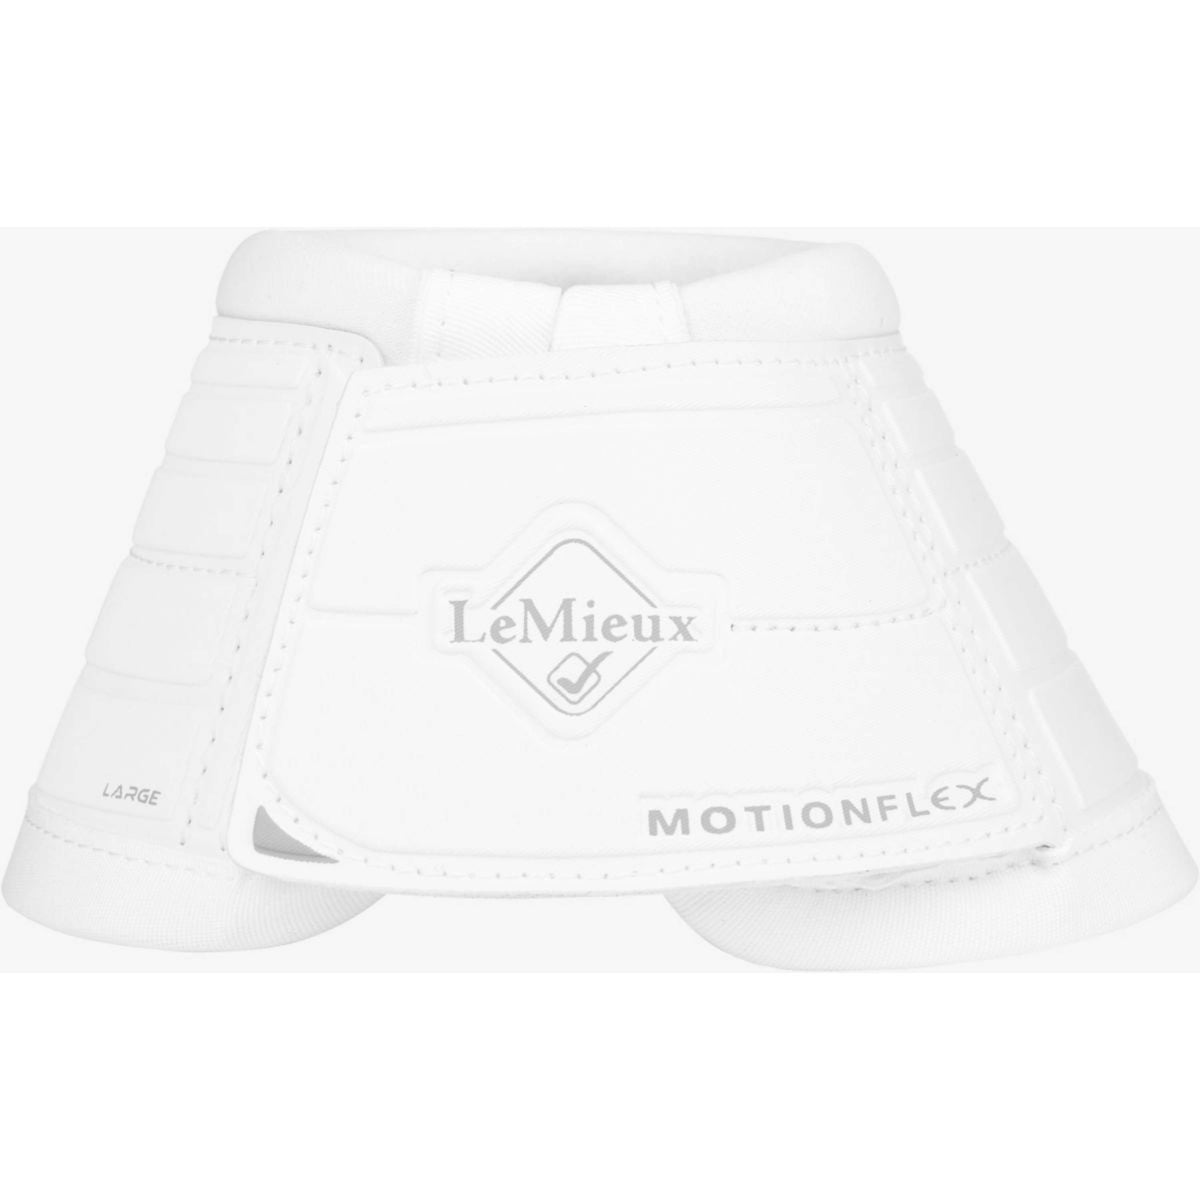 LeMieux Cloches d'Obstacles Motionflex OverReach Blanc